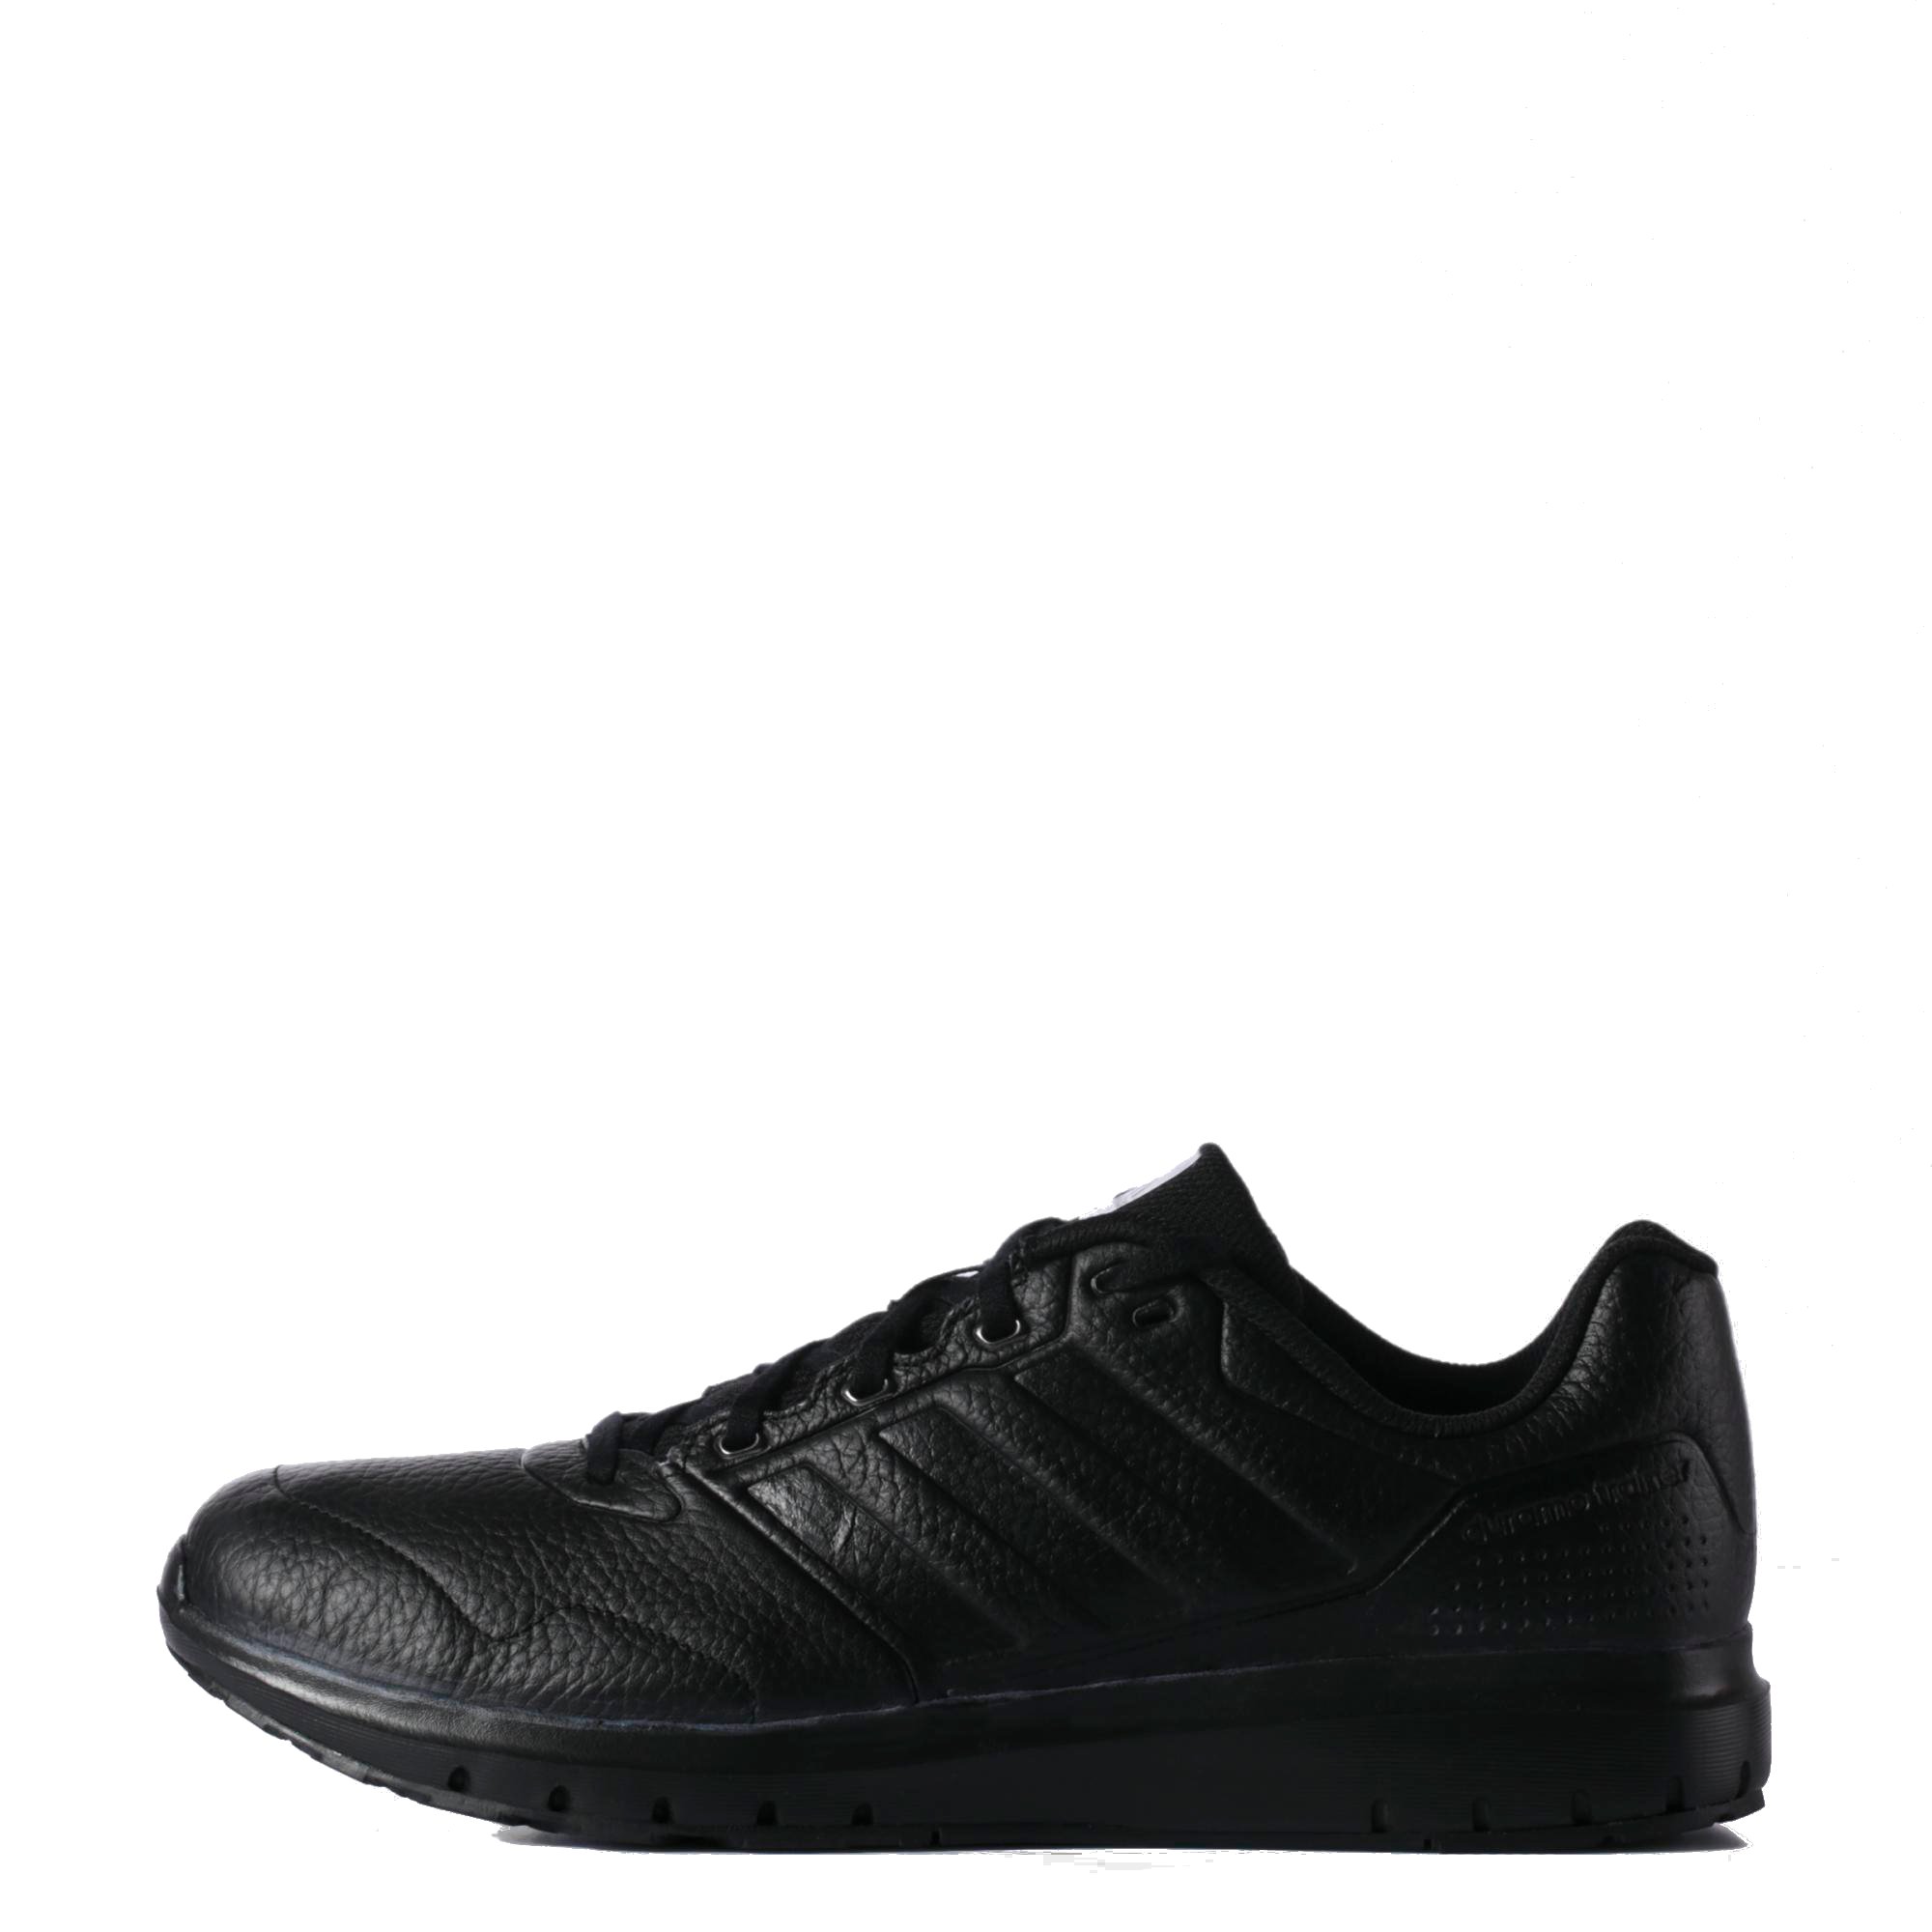 Figura Depresión apagado Adidas duramo Trainer Leather (negro) - manelsanchez.com